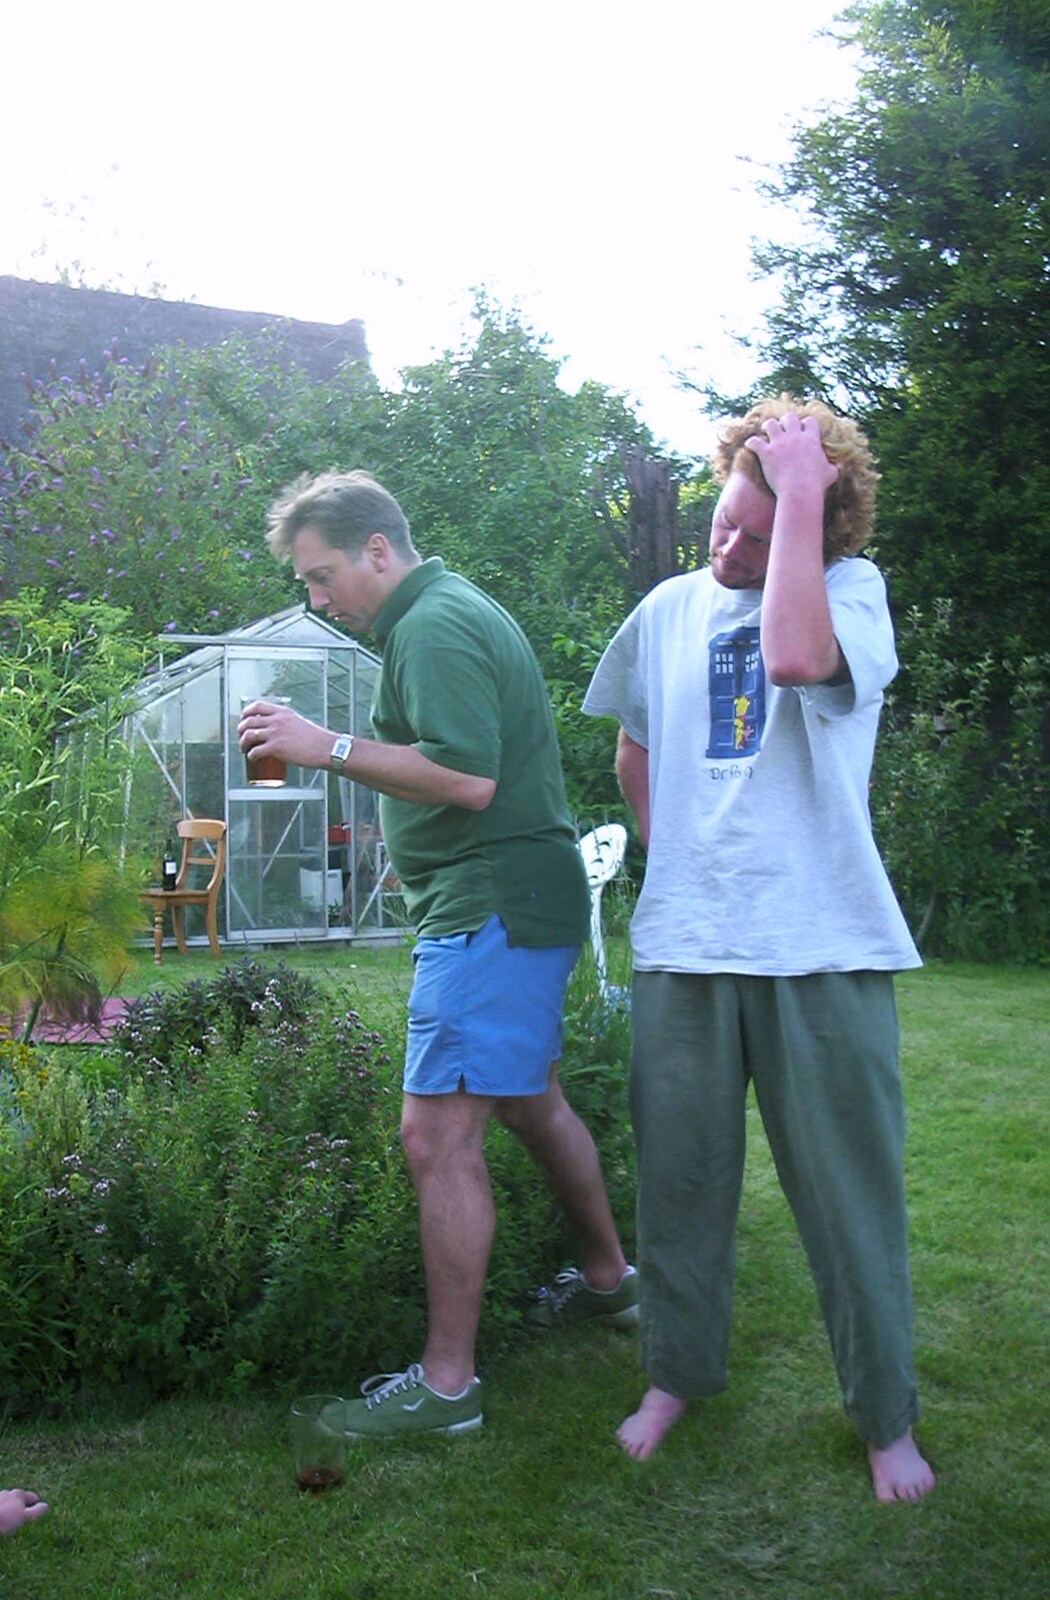 Nigel and Wavy from Radio 1's One Big Sunday, Chantry Park, Ipswich - 14th July 2002